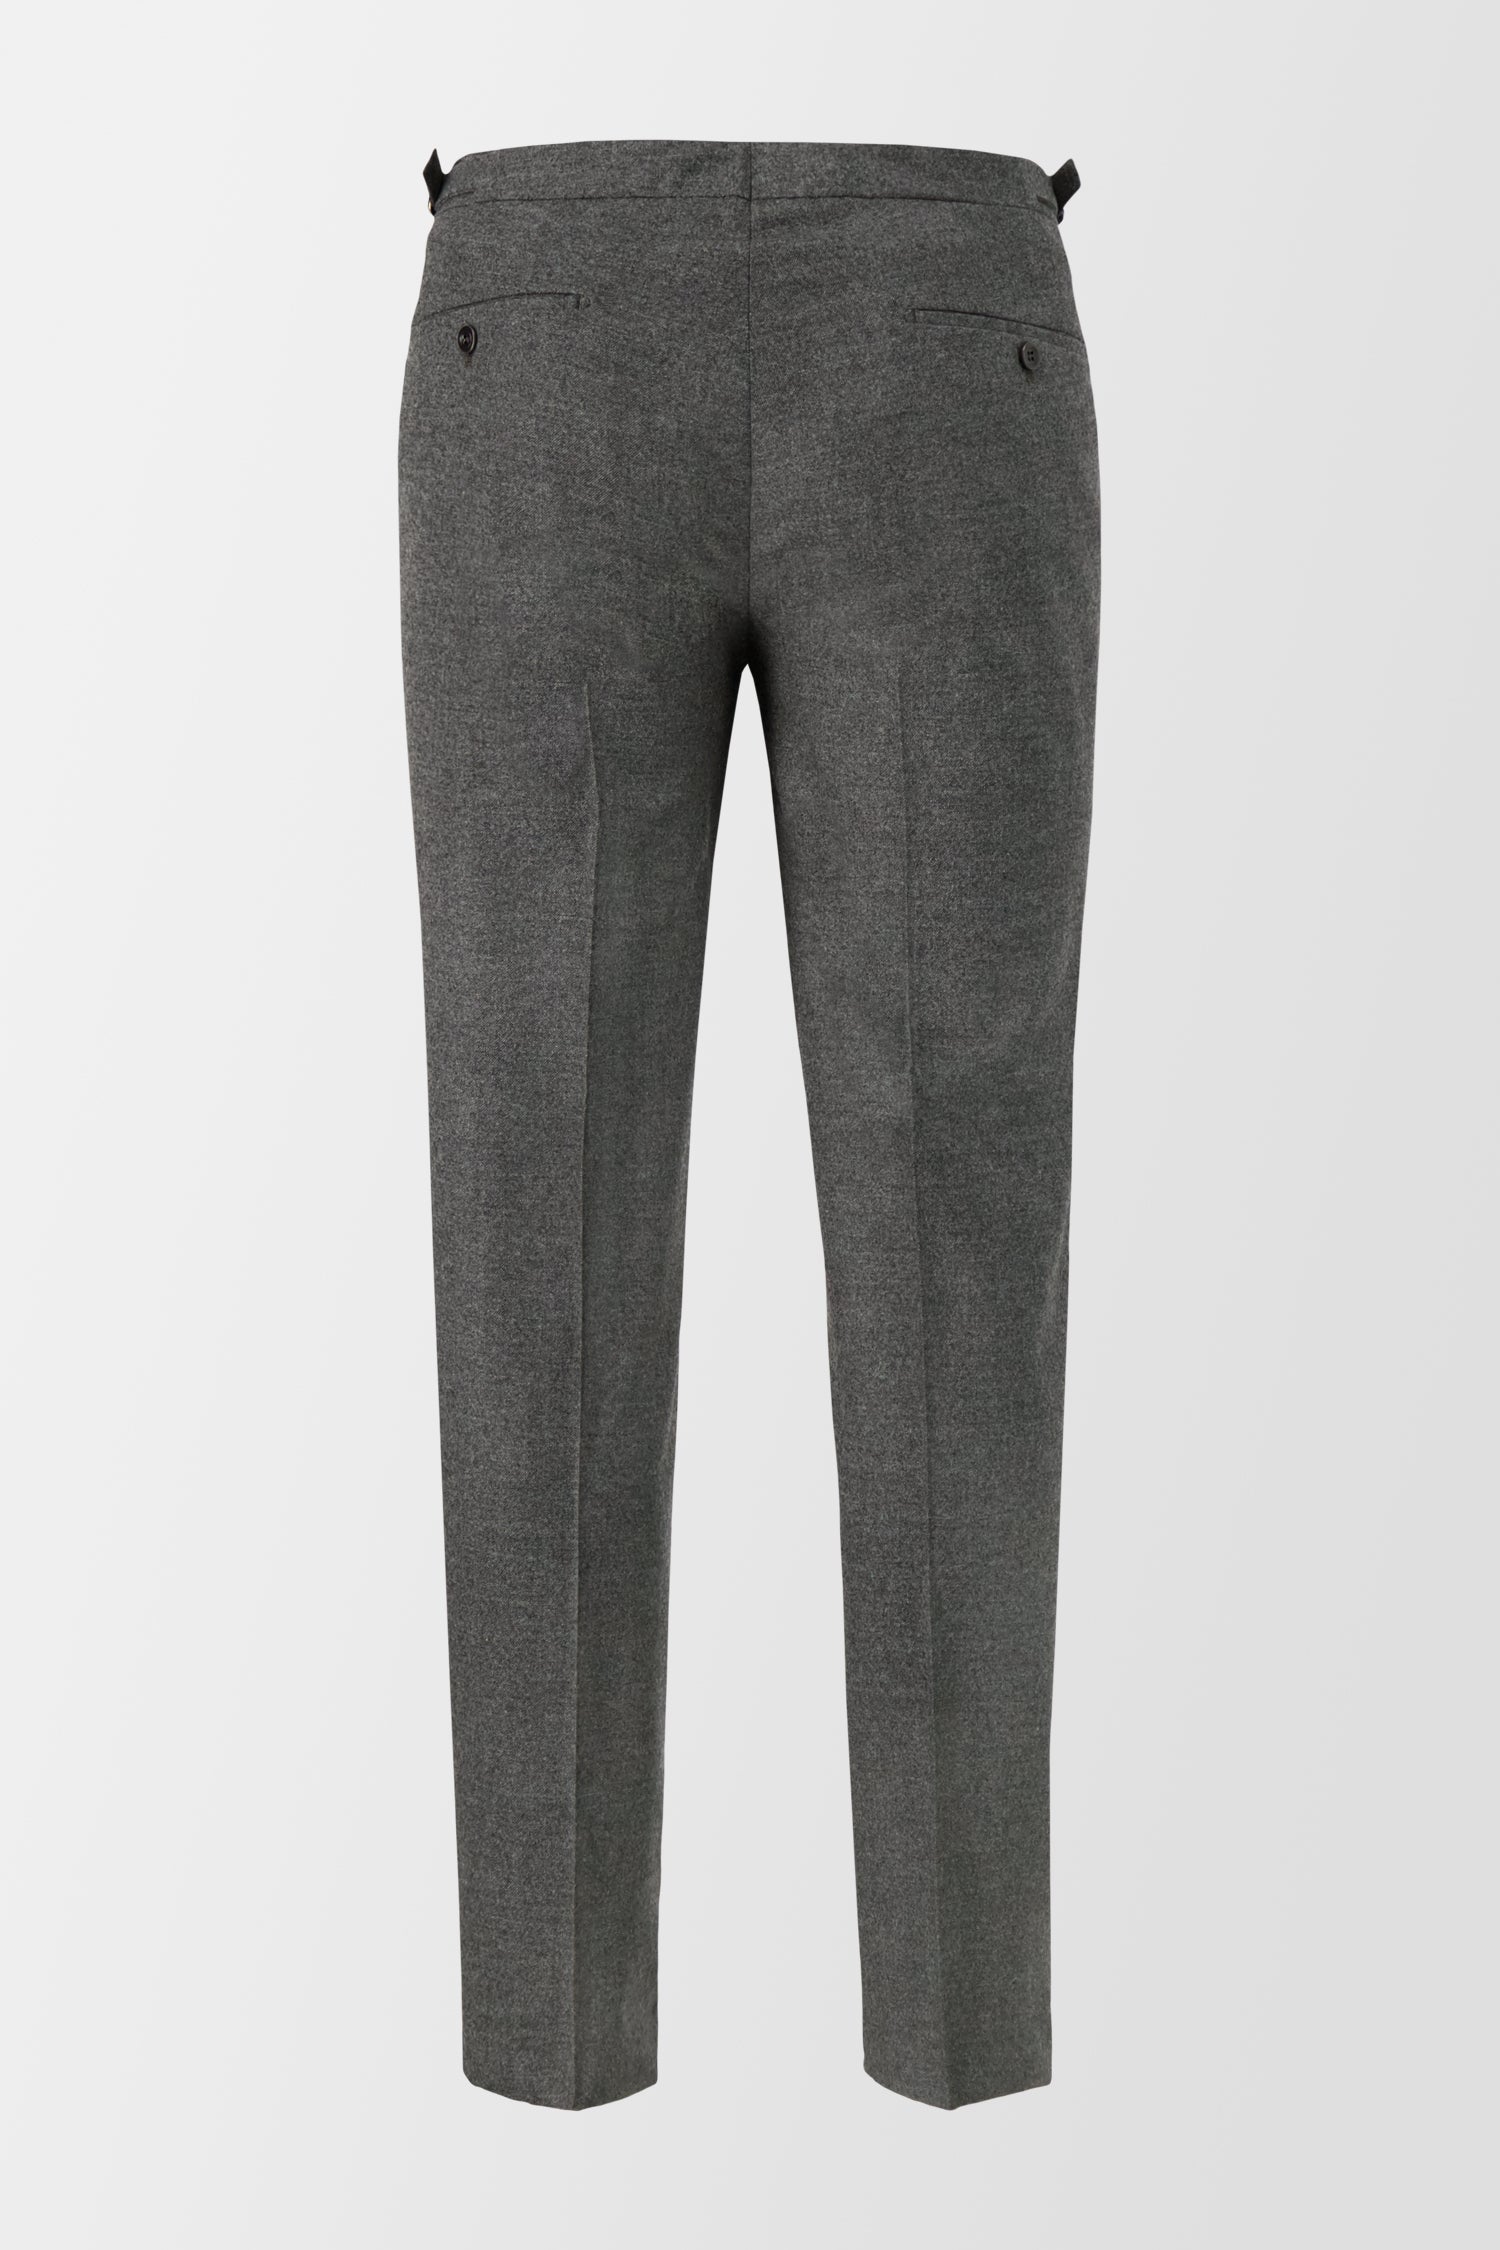 Incotex Grey Master Trousers